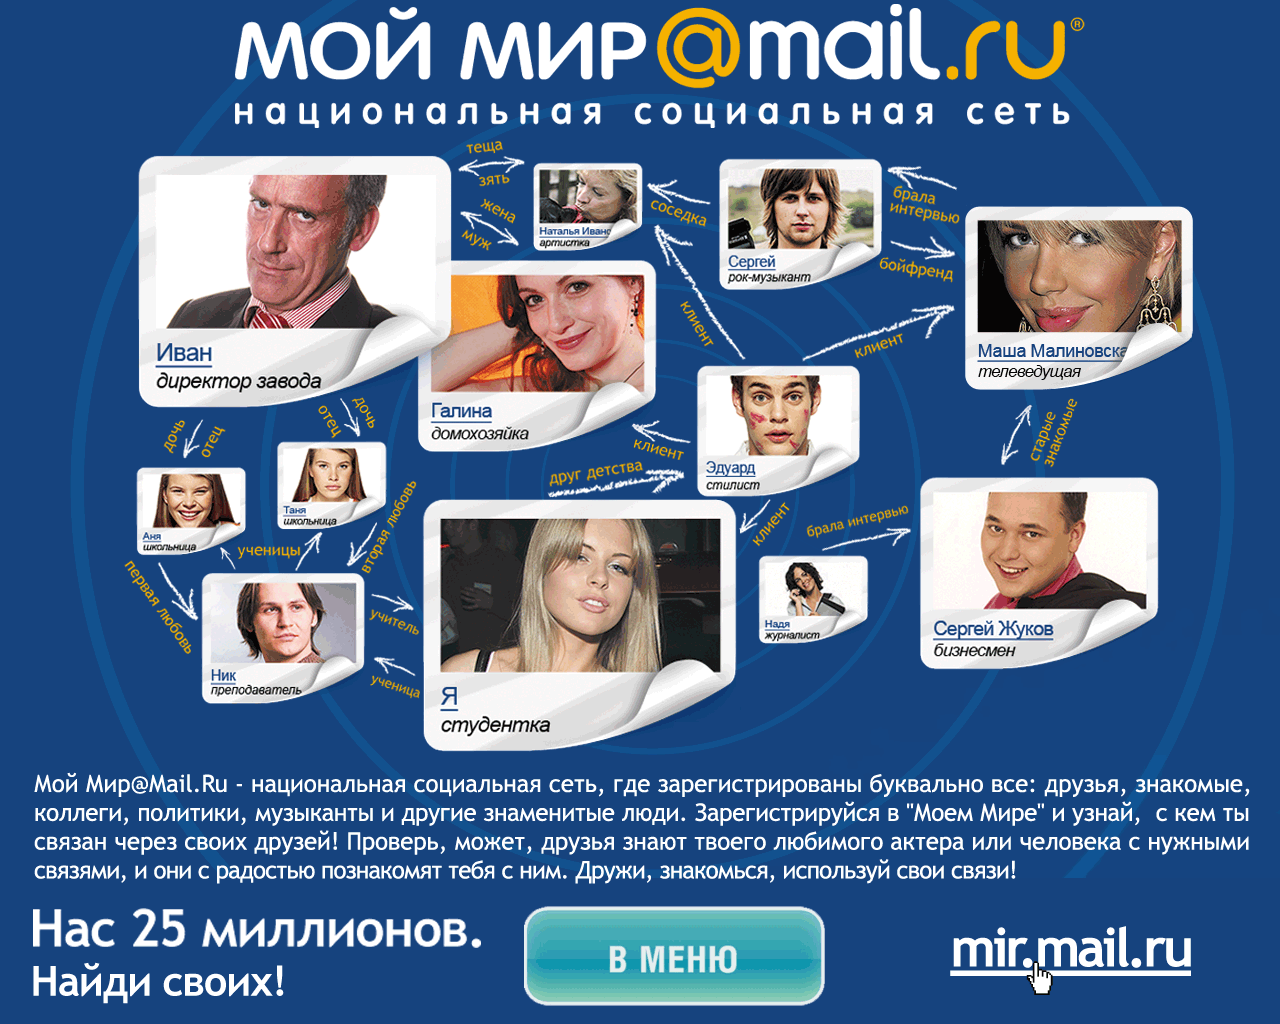 Mi mail ru. Мой мир. Мой мир@mail.ru. Mail мой мир. Соц сеть мой мир.